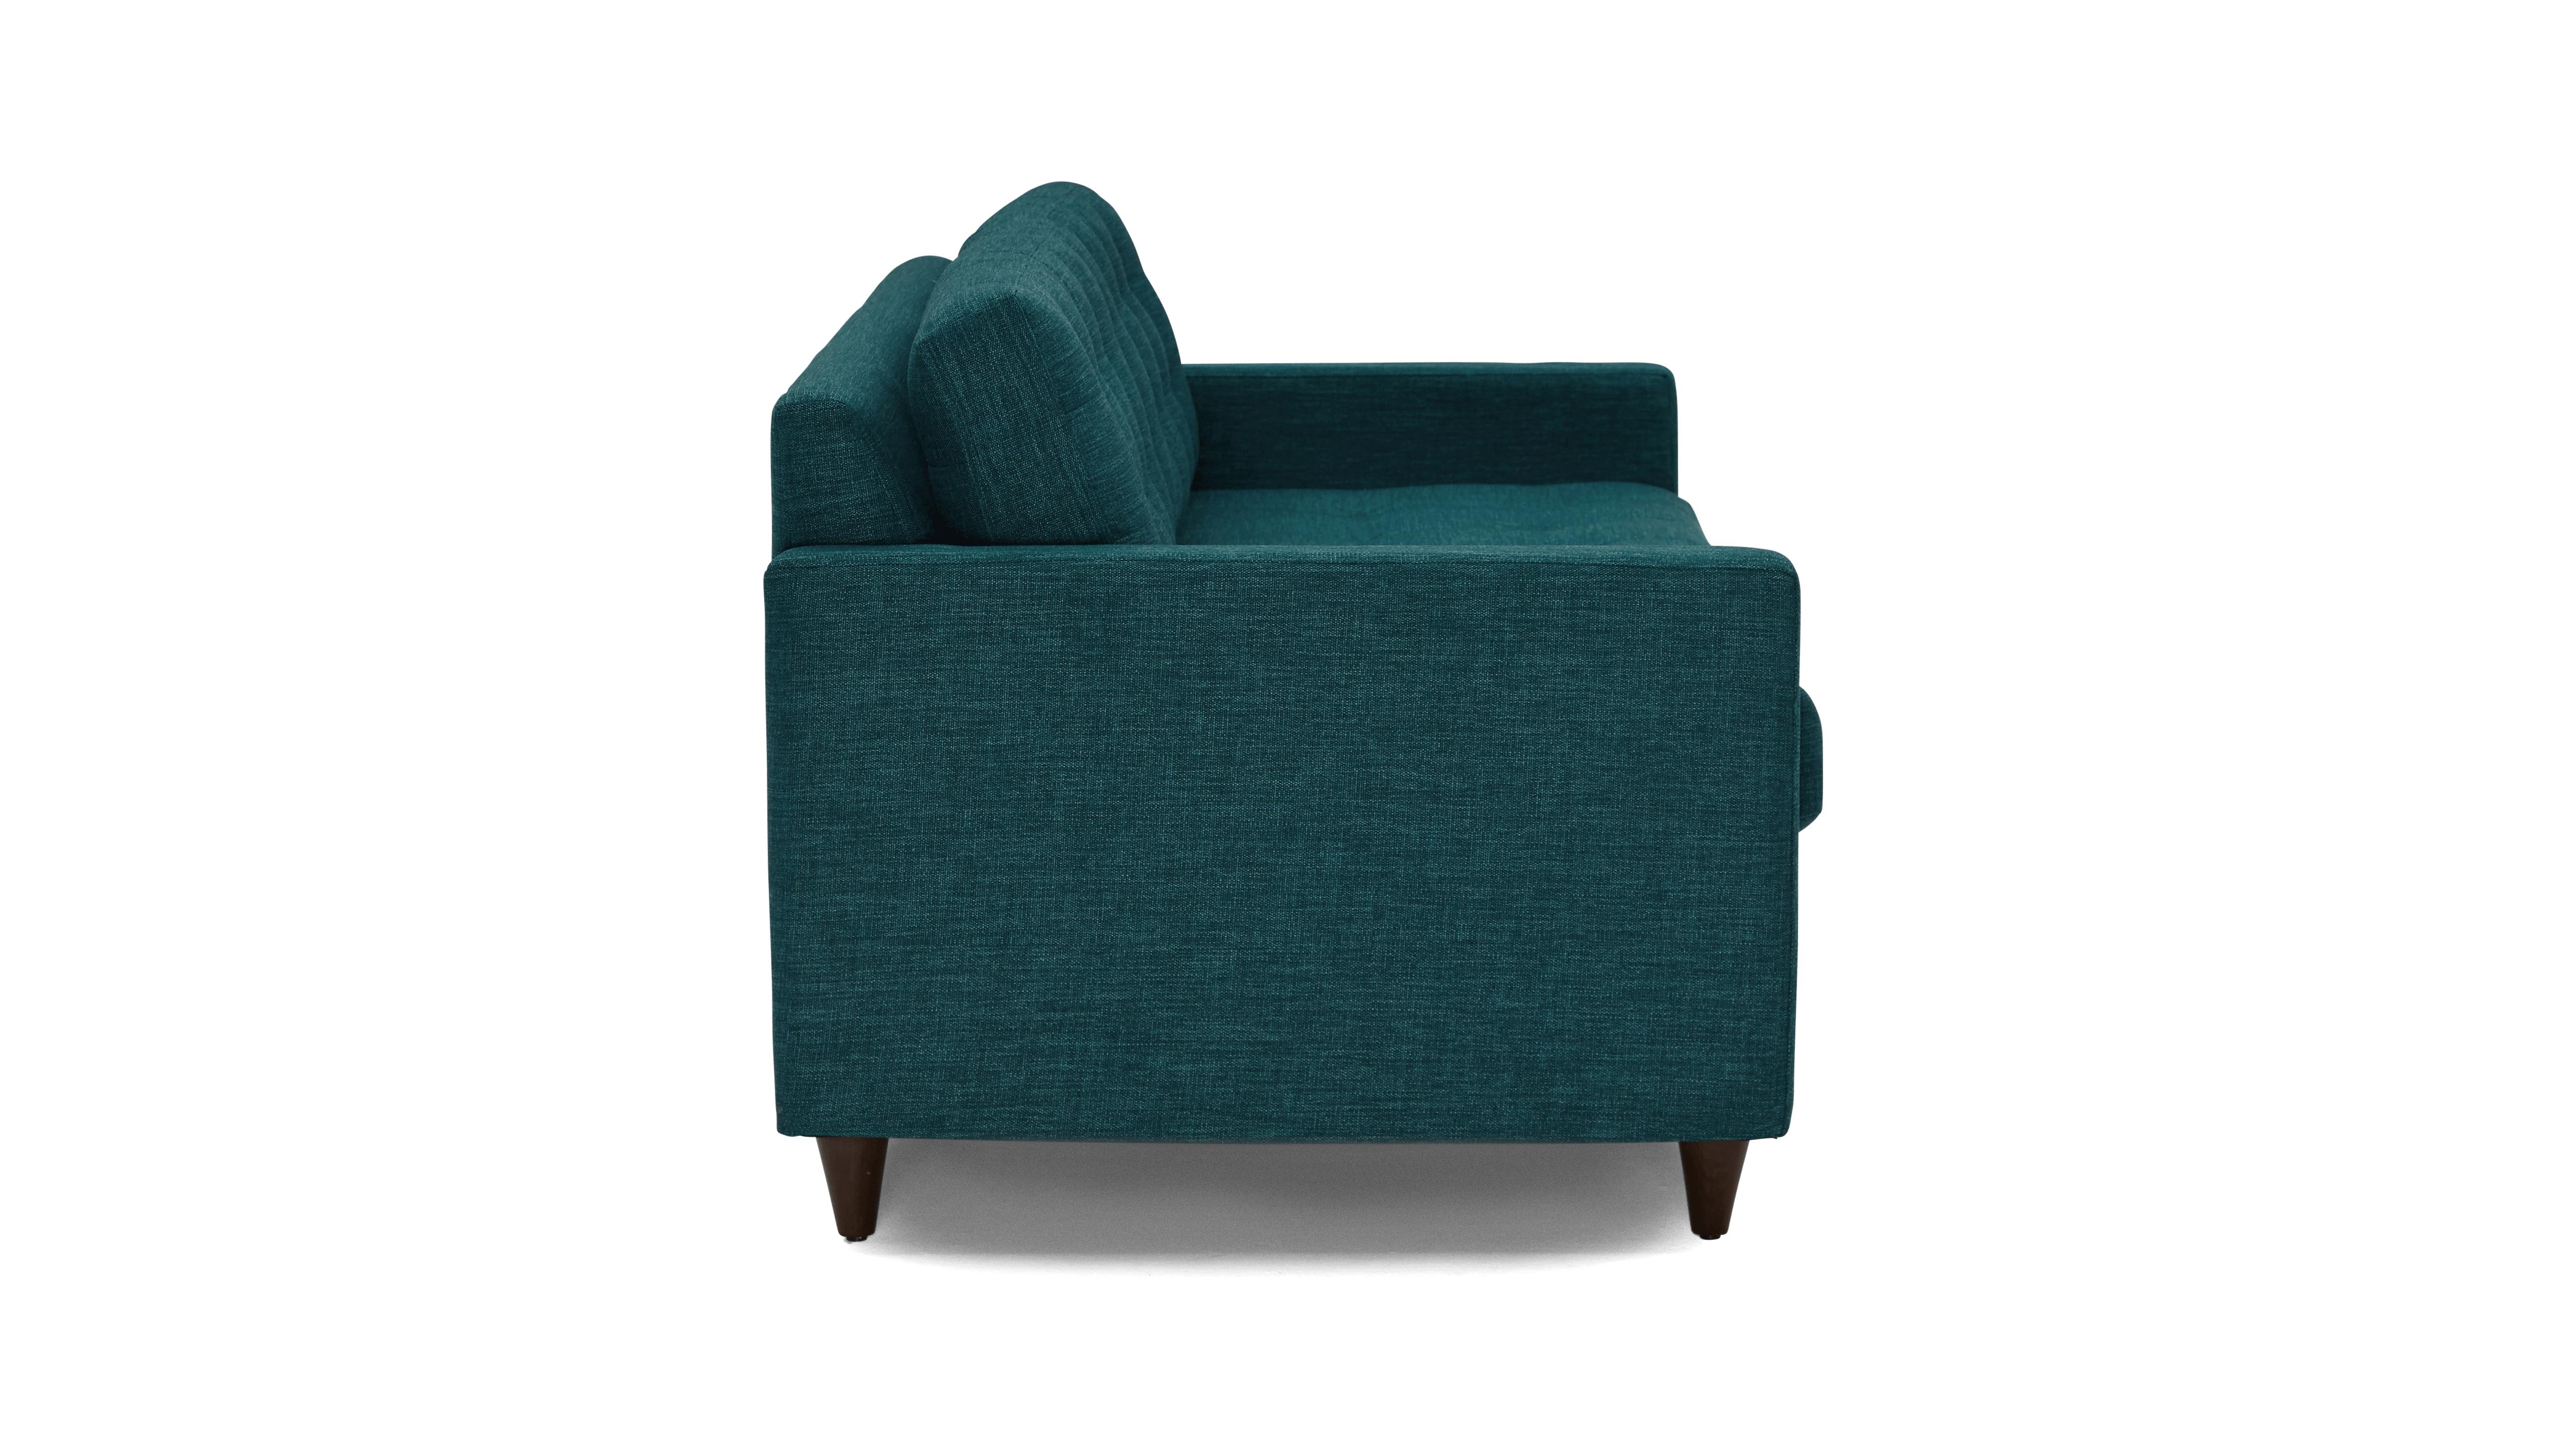 Blue Eliot Mid Century Modern Sleeper Sofa - Key Largo Zenith Teal - Mocha - Foam - Image 2